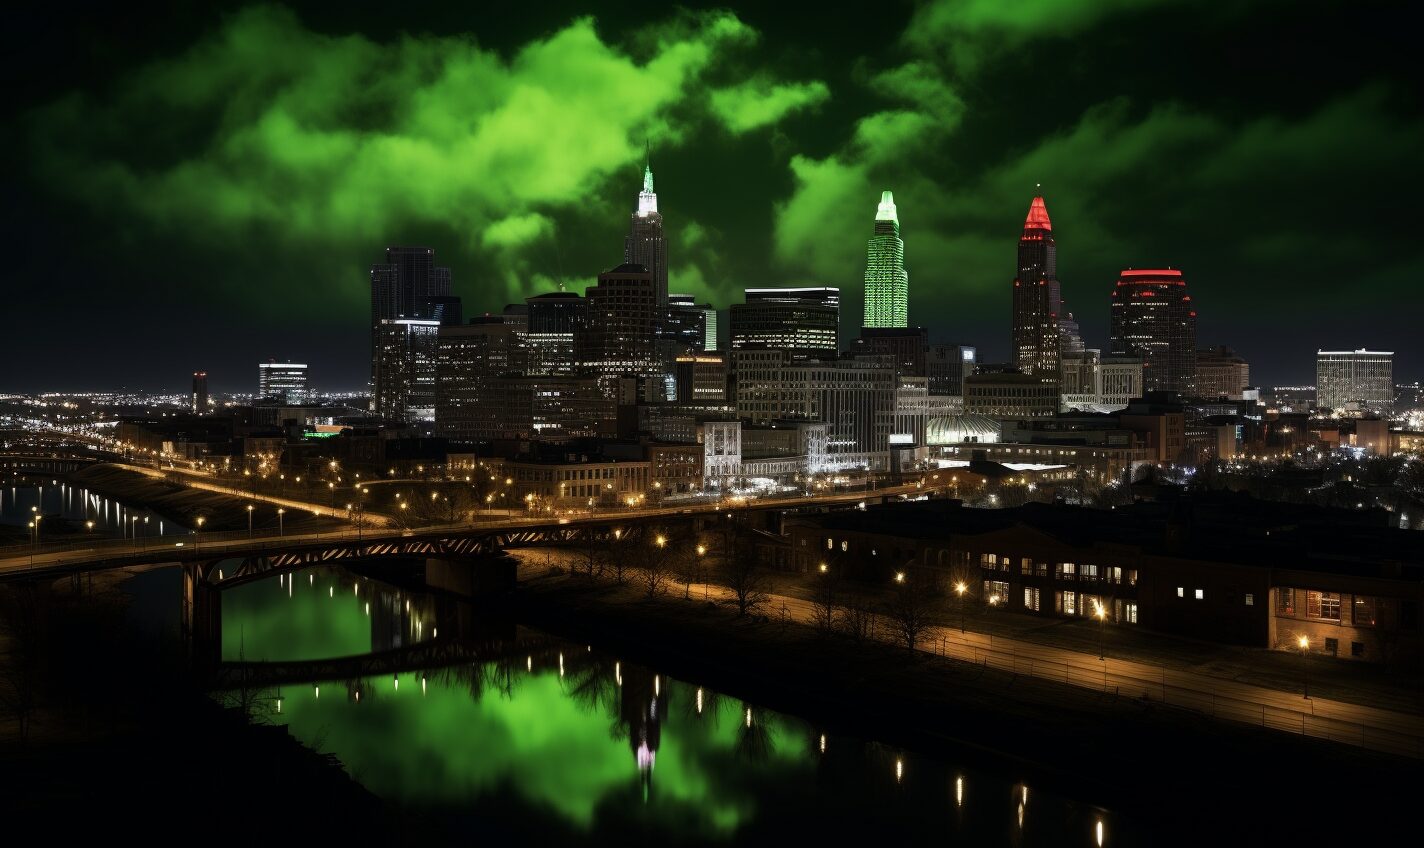 cincinnati, ohio in a black and neon green glow